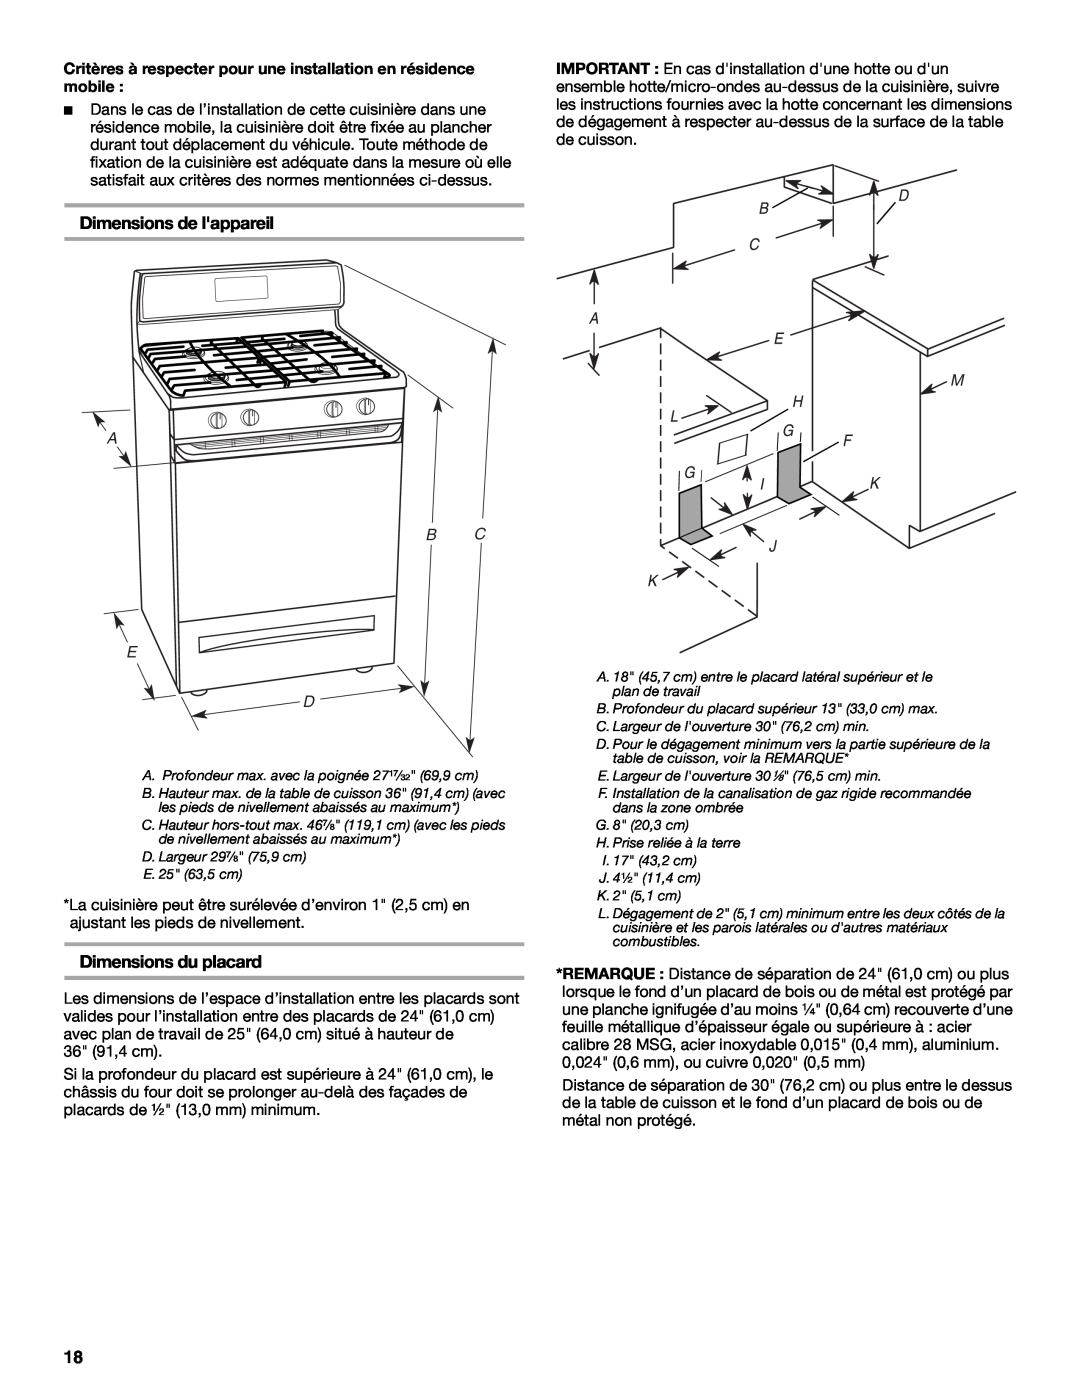 Whirlpool W10196160B installation instructions Dimensions de lappareil, Dimensions du placard, A Bc E D 